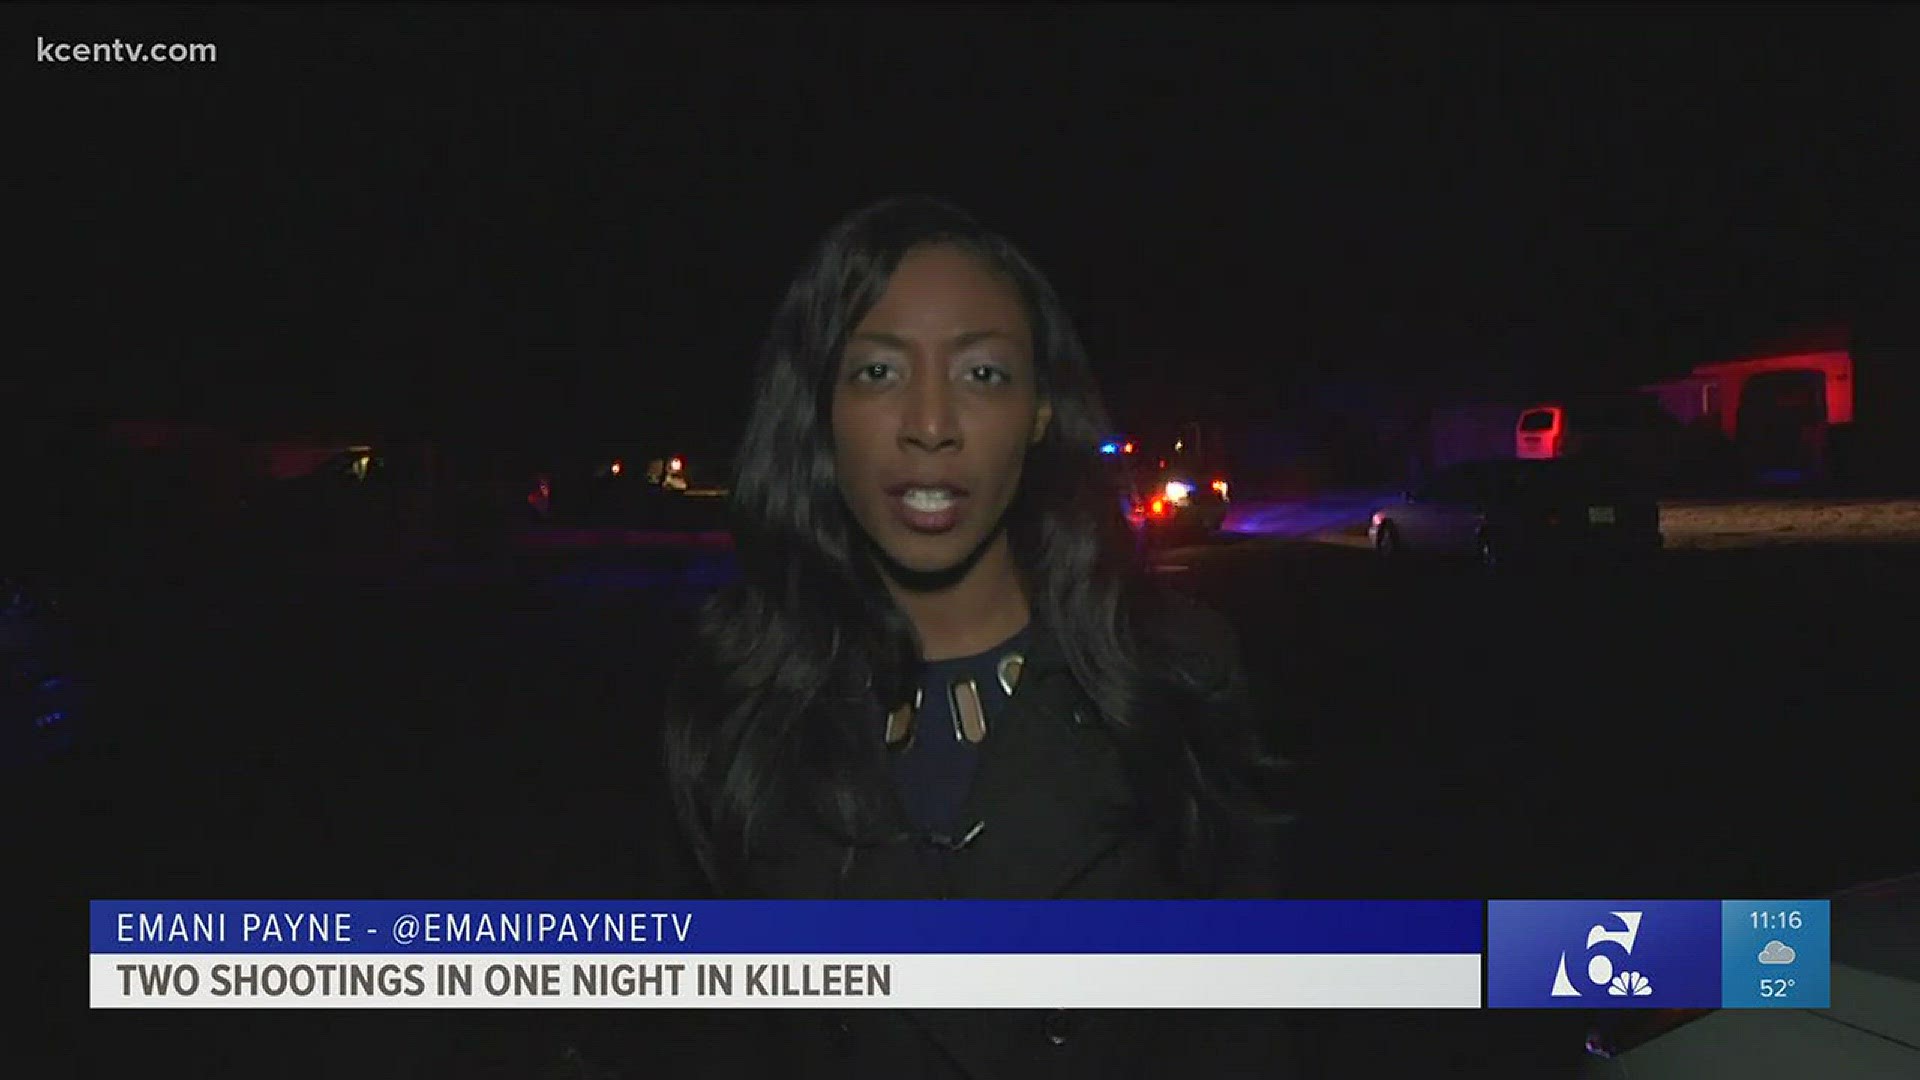 Two shootings in one night in Killeen